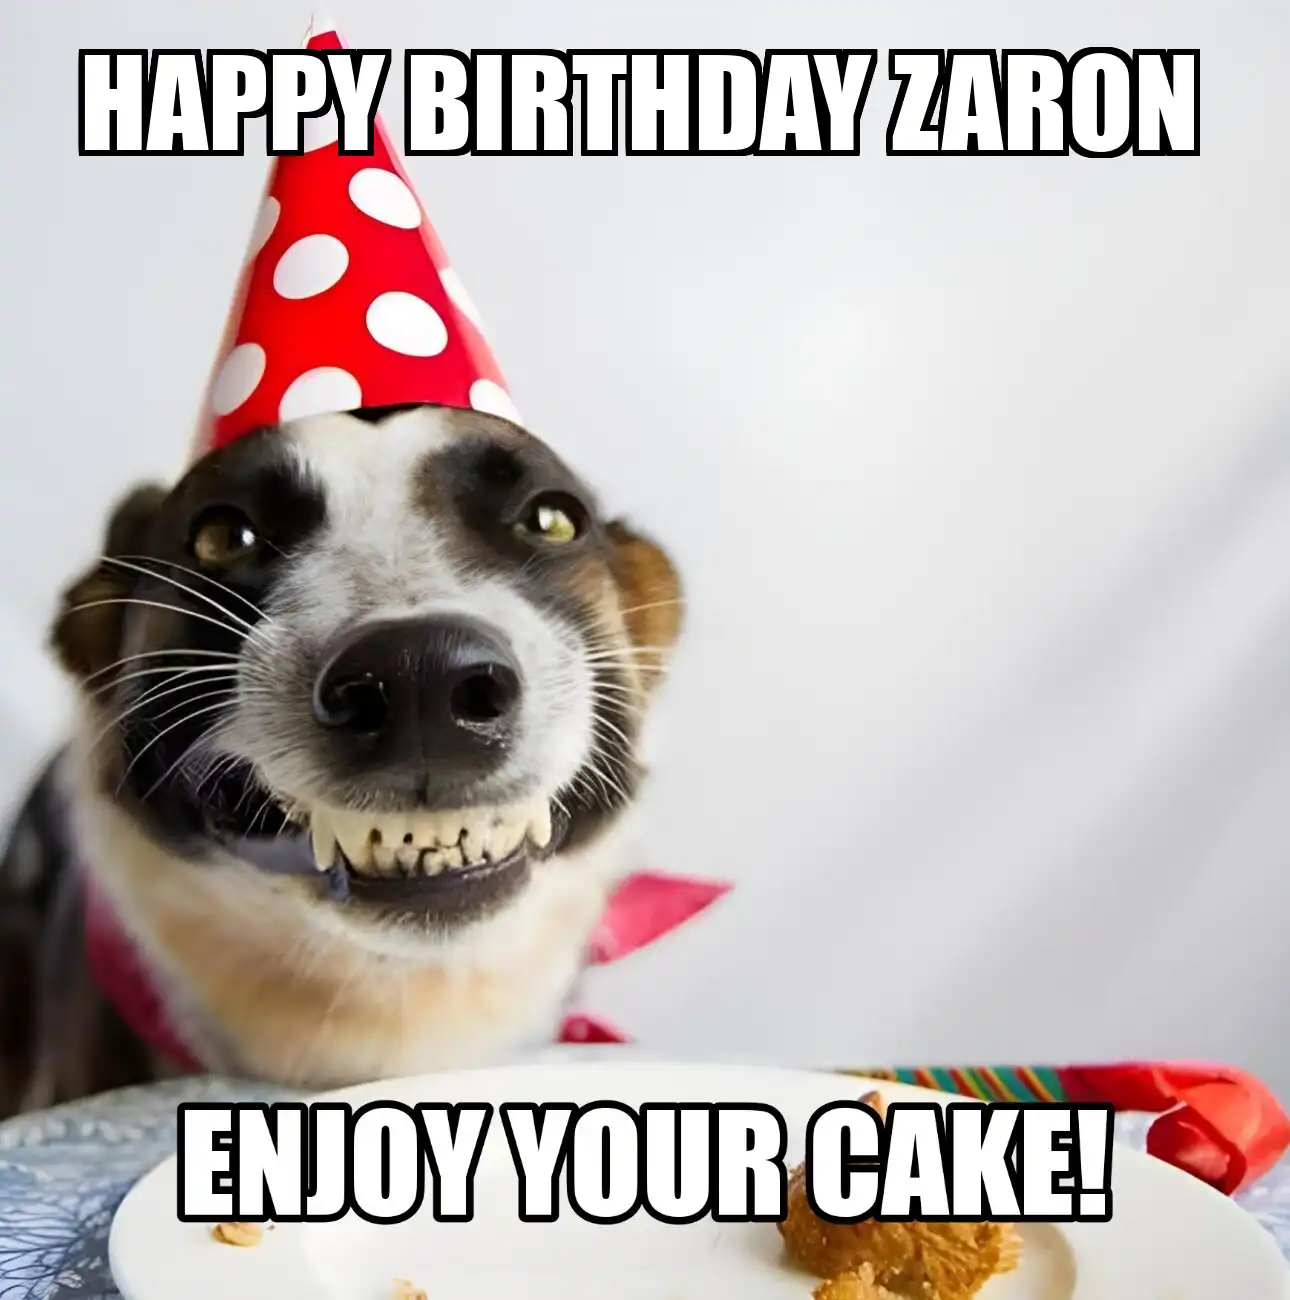 Happy Birthday Zaron Enjoy Your Cake Dog Meme